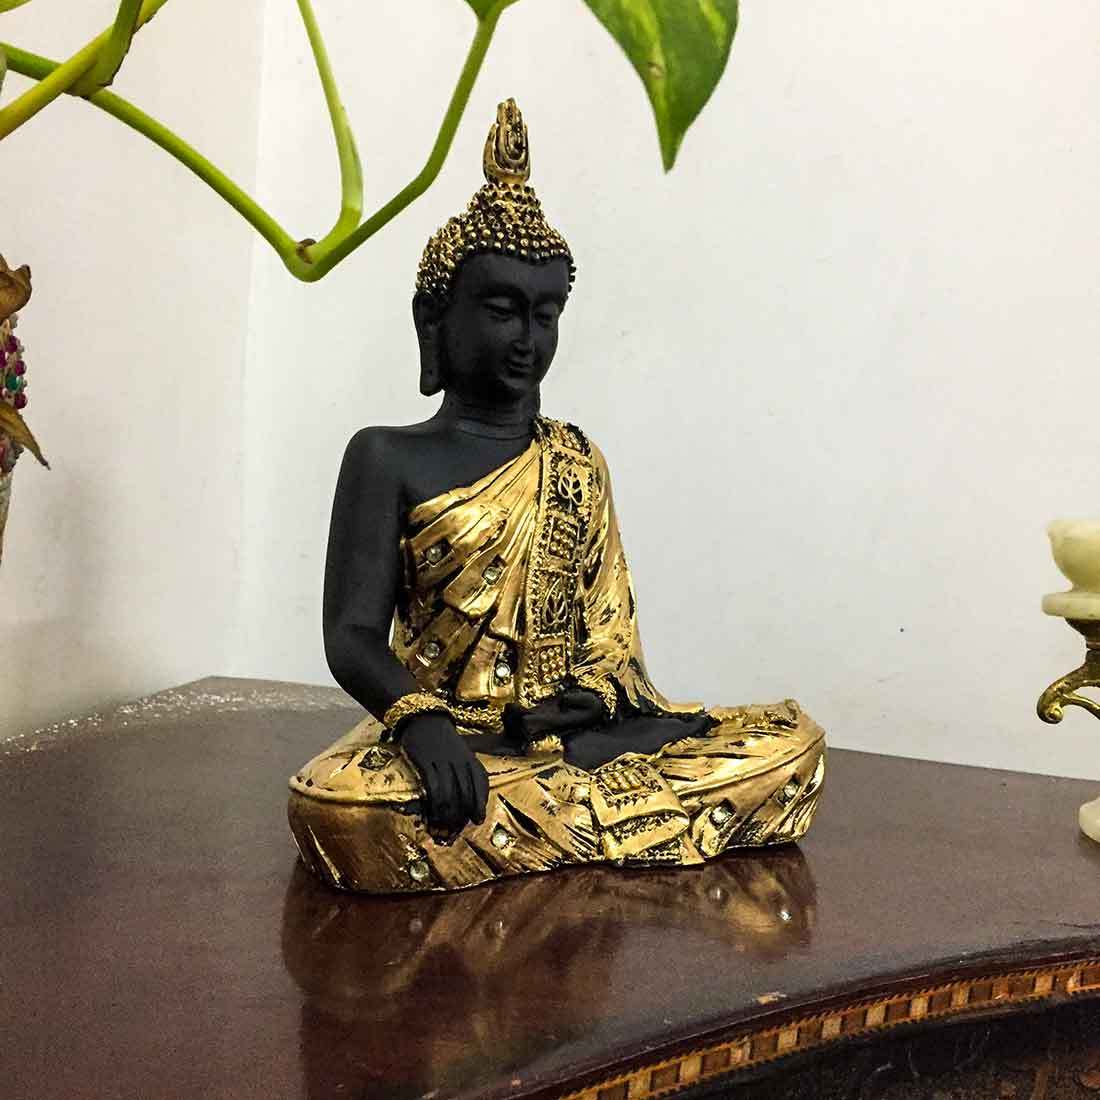 Meditating Buddha Statue - for Peace and Harmony  - 9 Inch - ApkaMart